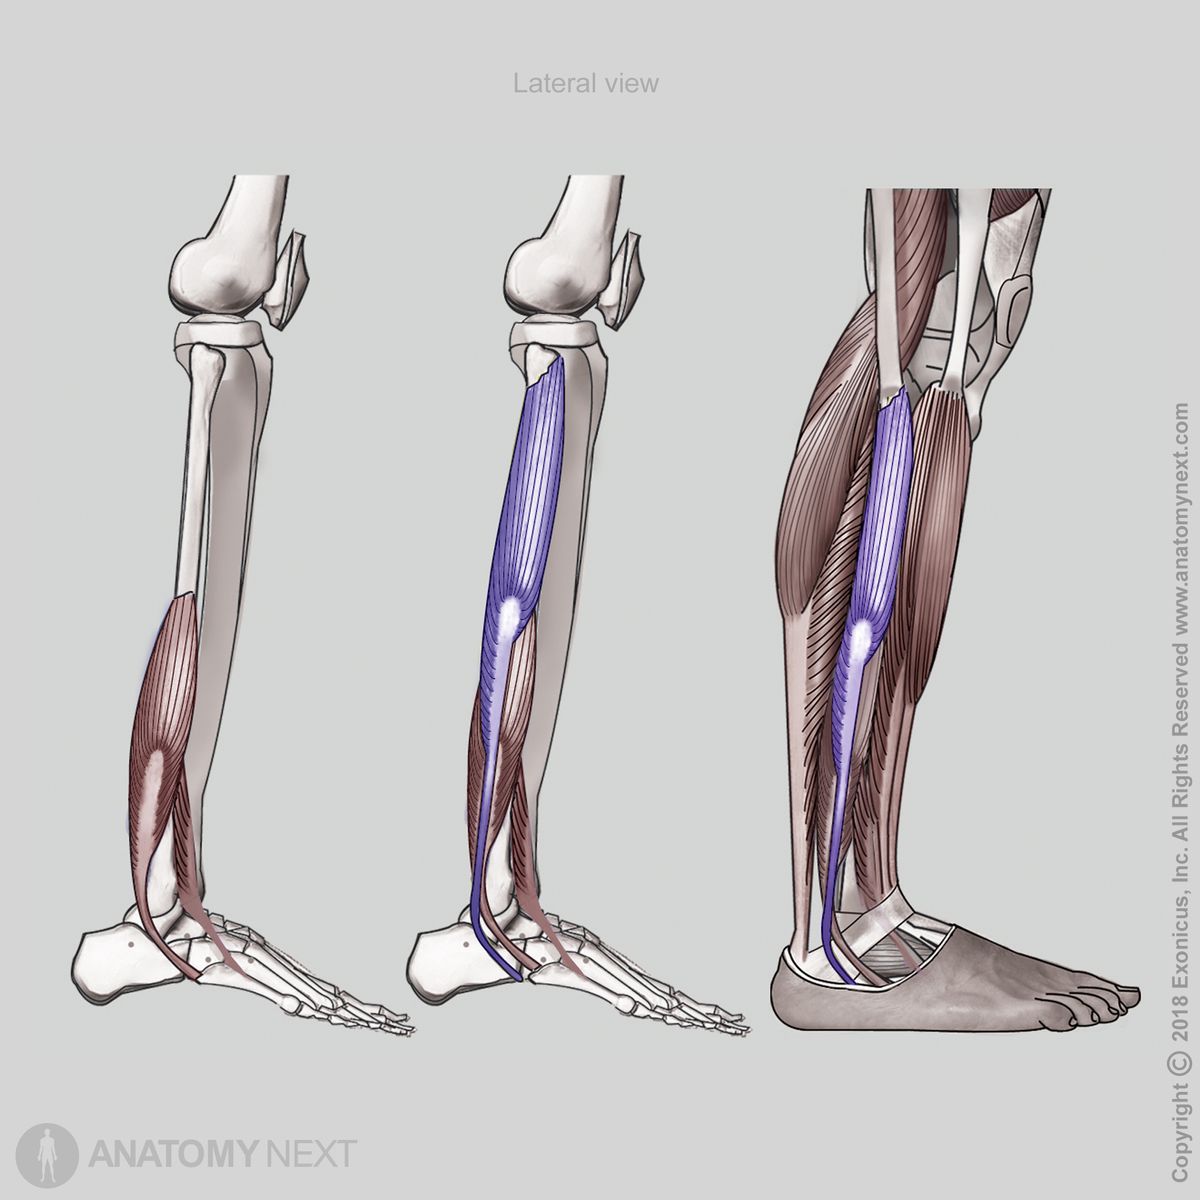 Peroneus longus, Fibularis longus, Insertion of peroneus longus, Insertion of fibularis longus, Origin of peroneus longus, Origin of fibularis longus, Lateral compartment of leg, Lateral compartment muscles, Leg muscles, Human leg